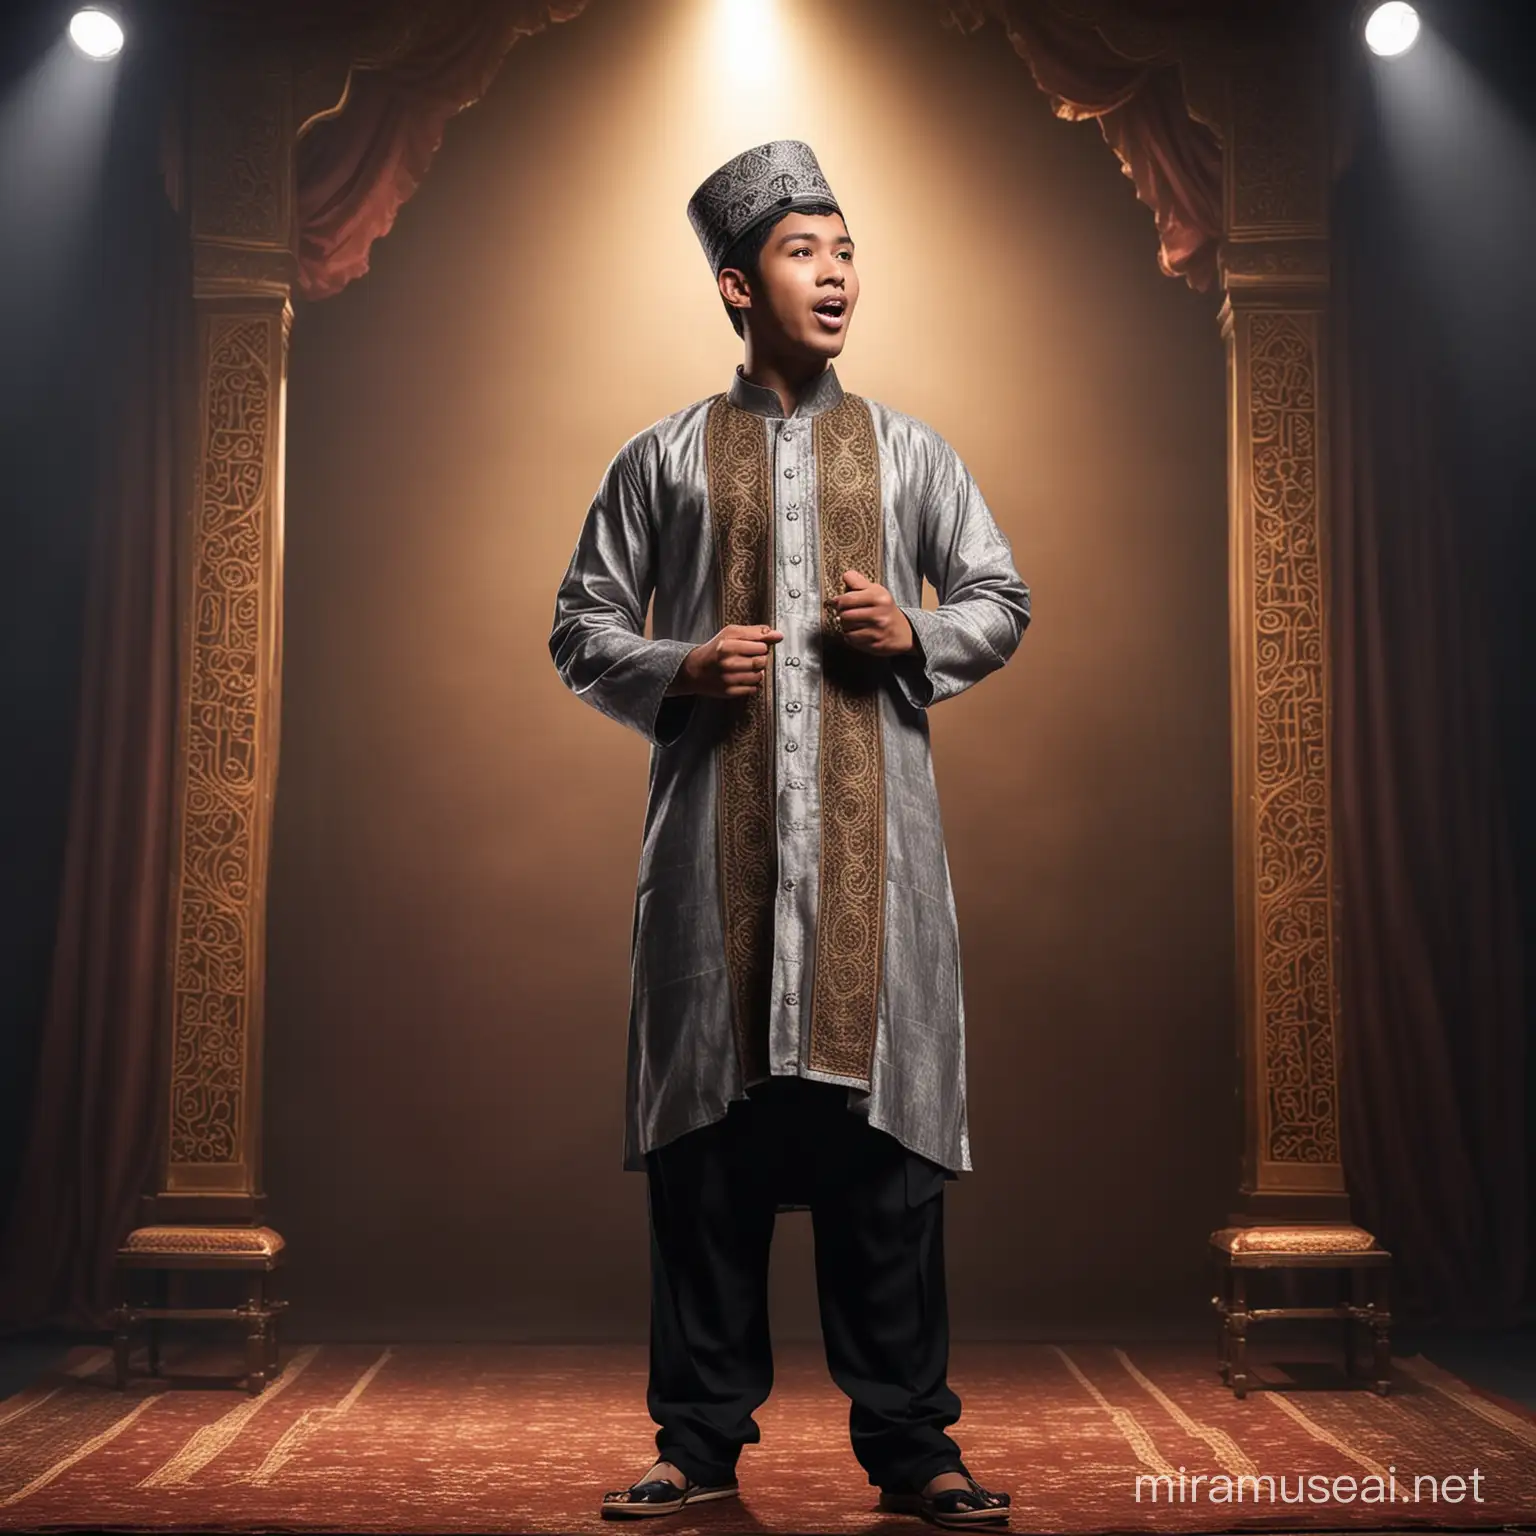 Seorang laki laki muda ganteng, wajah indonesia memakai busana muslim, berdiri di atas panggung pentas musik, bernyanyi.
Baiground layar studio fantastik..panggung megah..
Full body